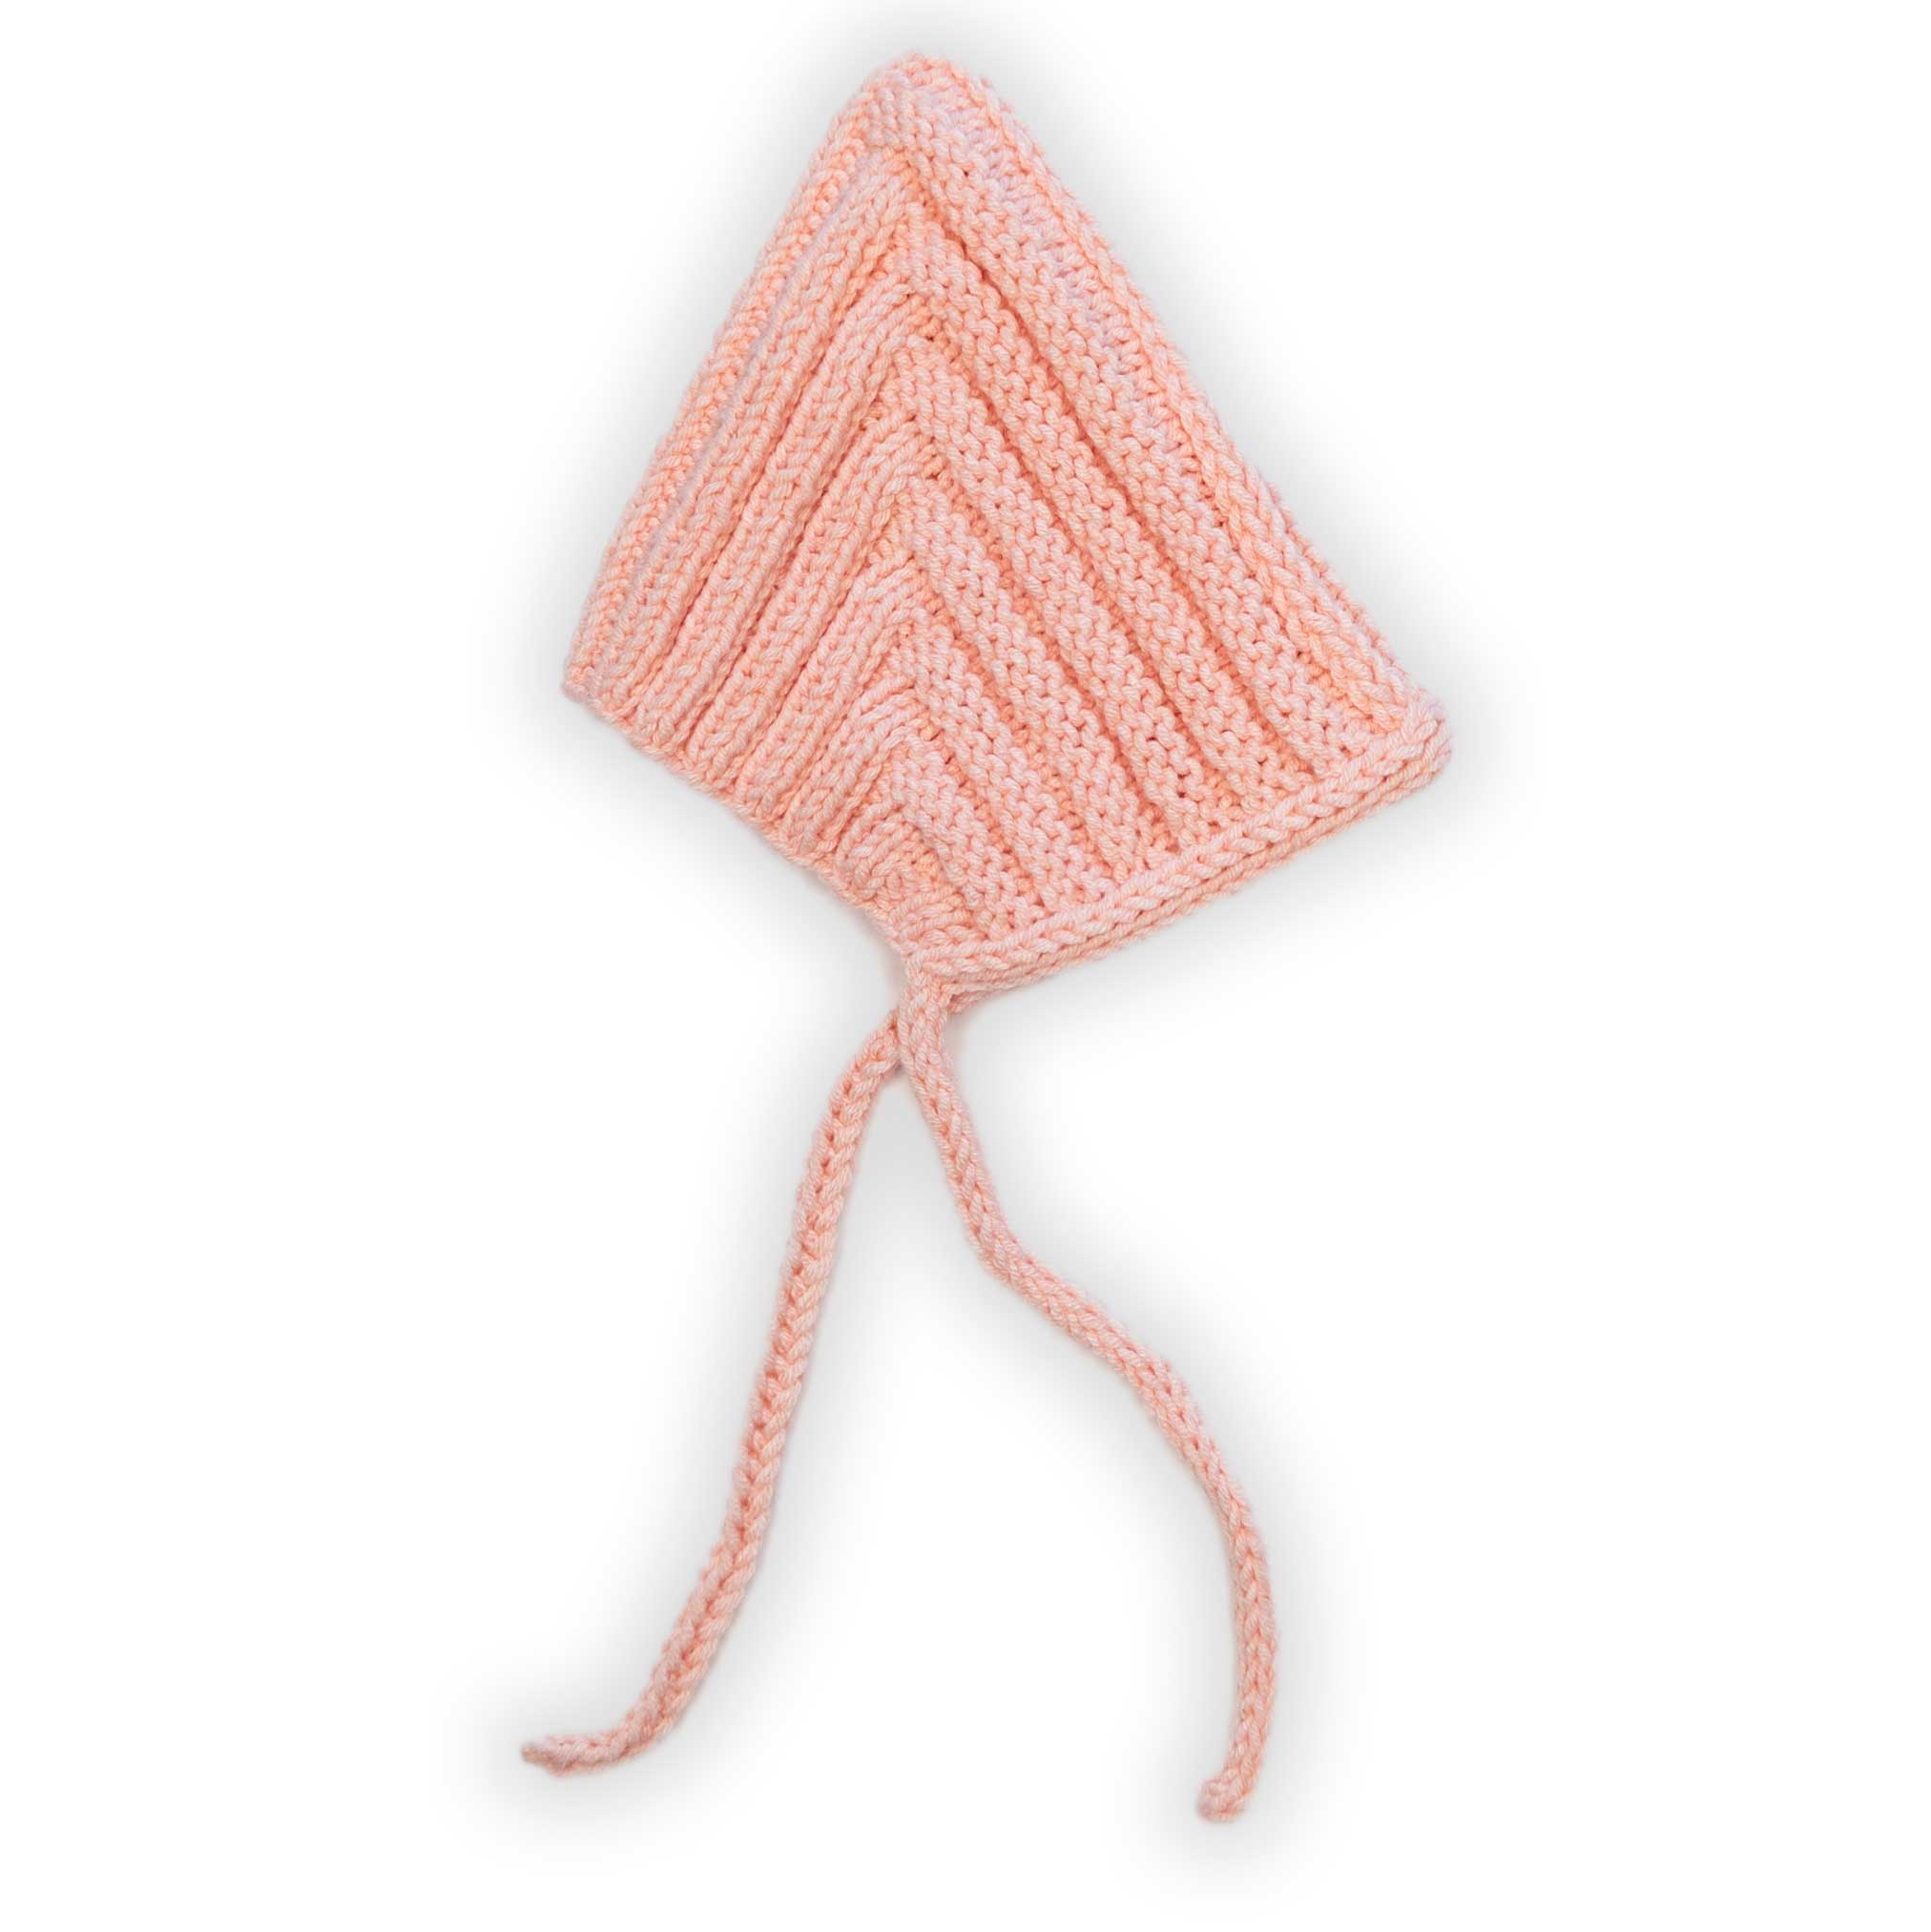 knitted pixie bonnet in pink miniland/paola reina/minikane dolls 34-38cm